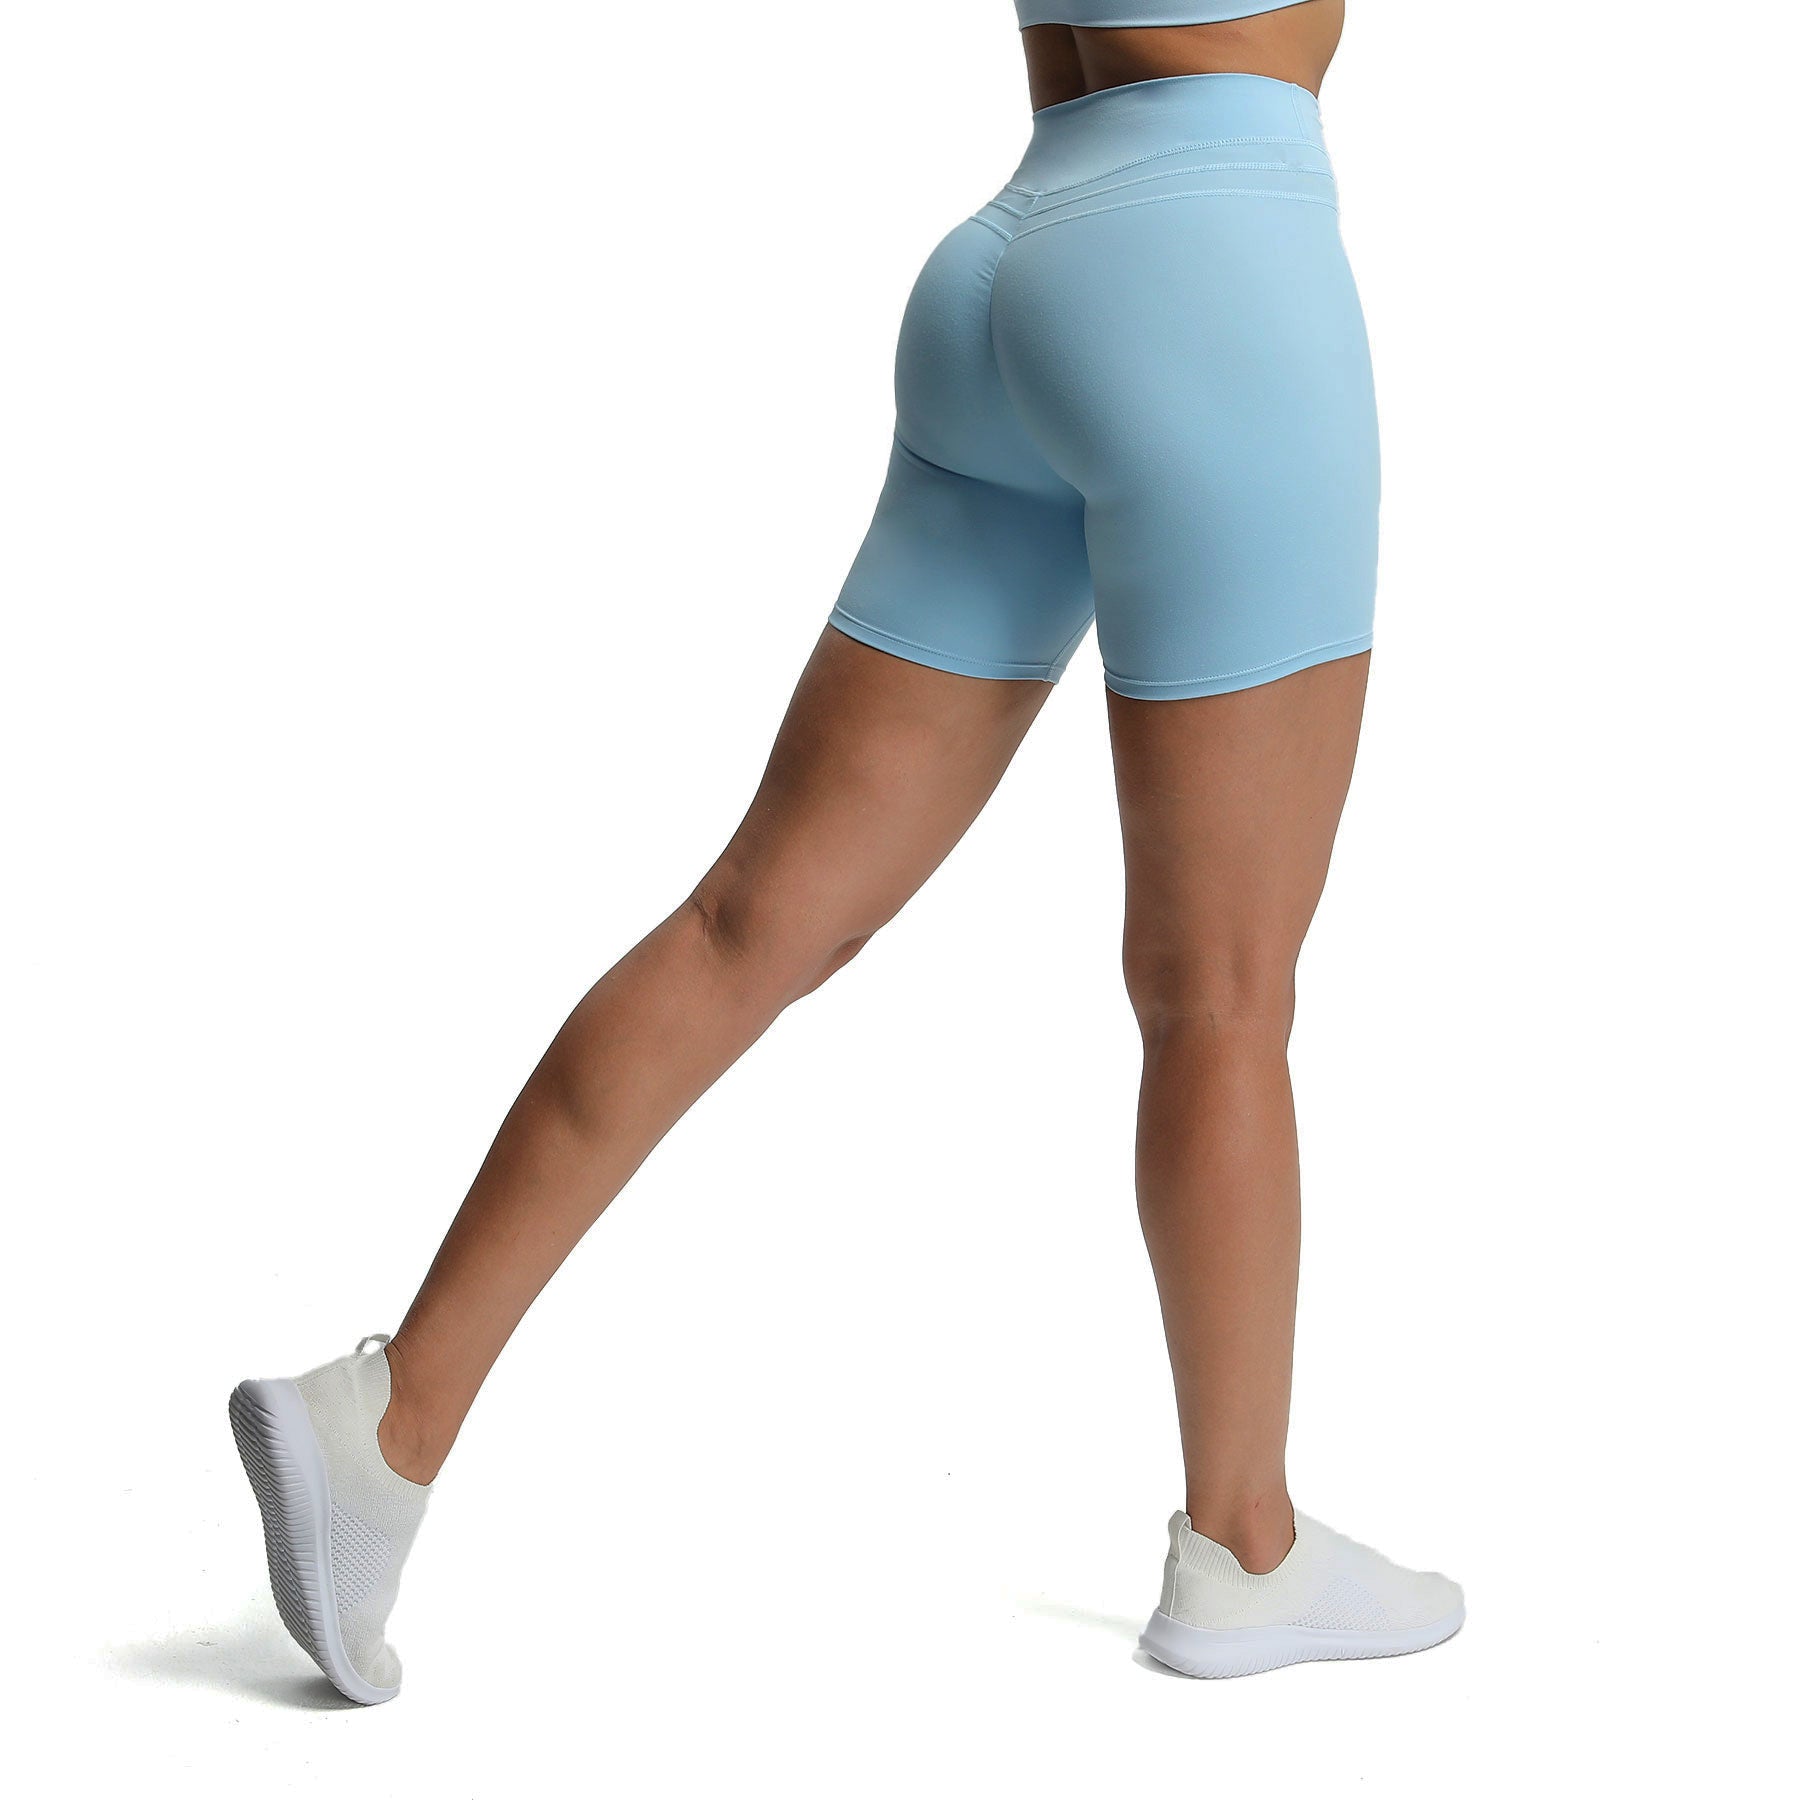 Aoxjox "Luna" Soft Scrunch Shorts